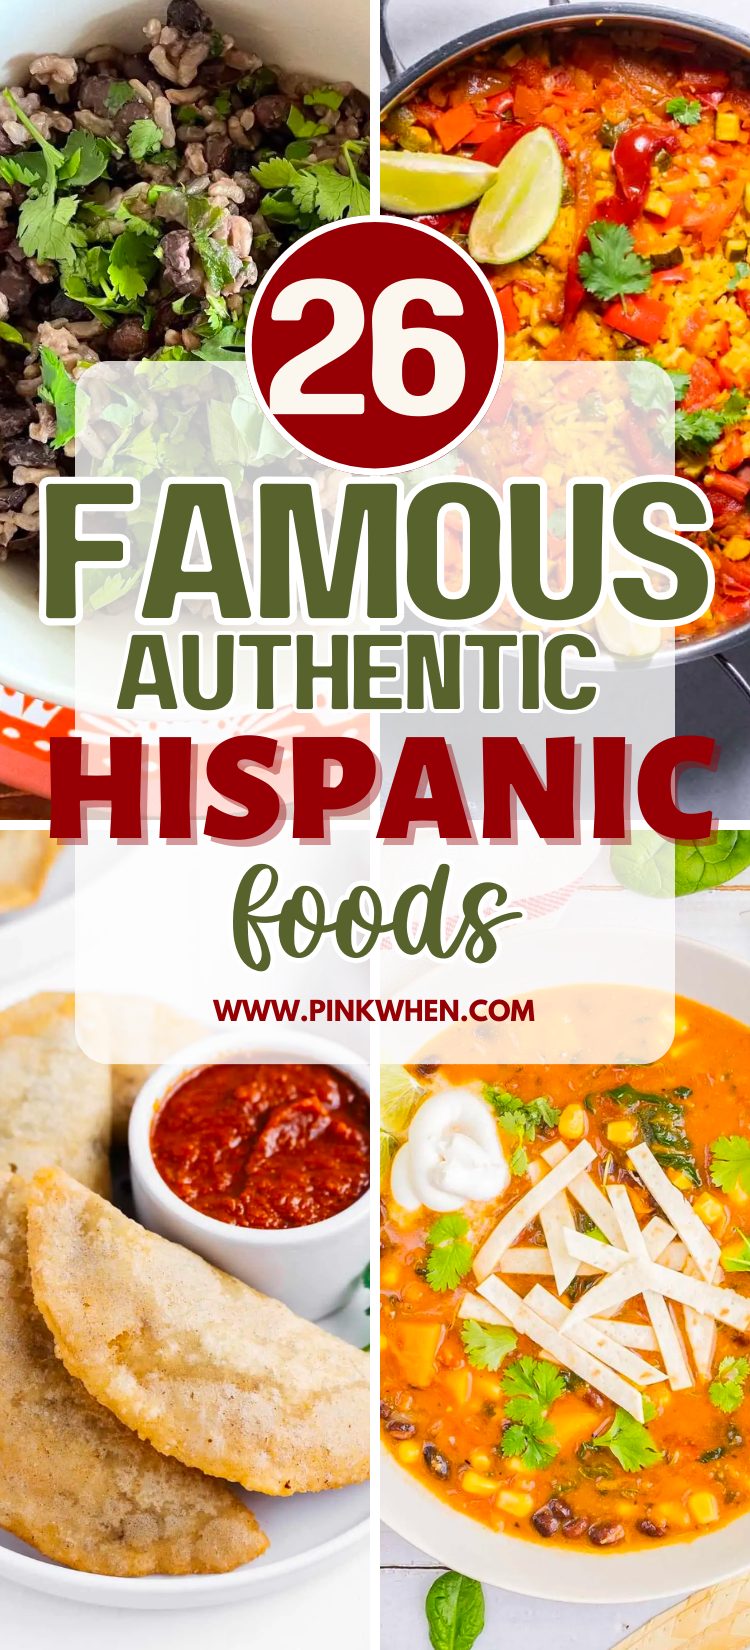 26 Famous Authentic Hispanic Foods